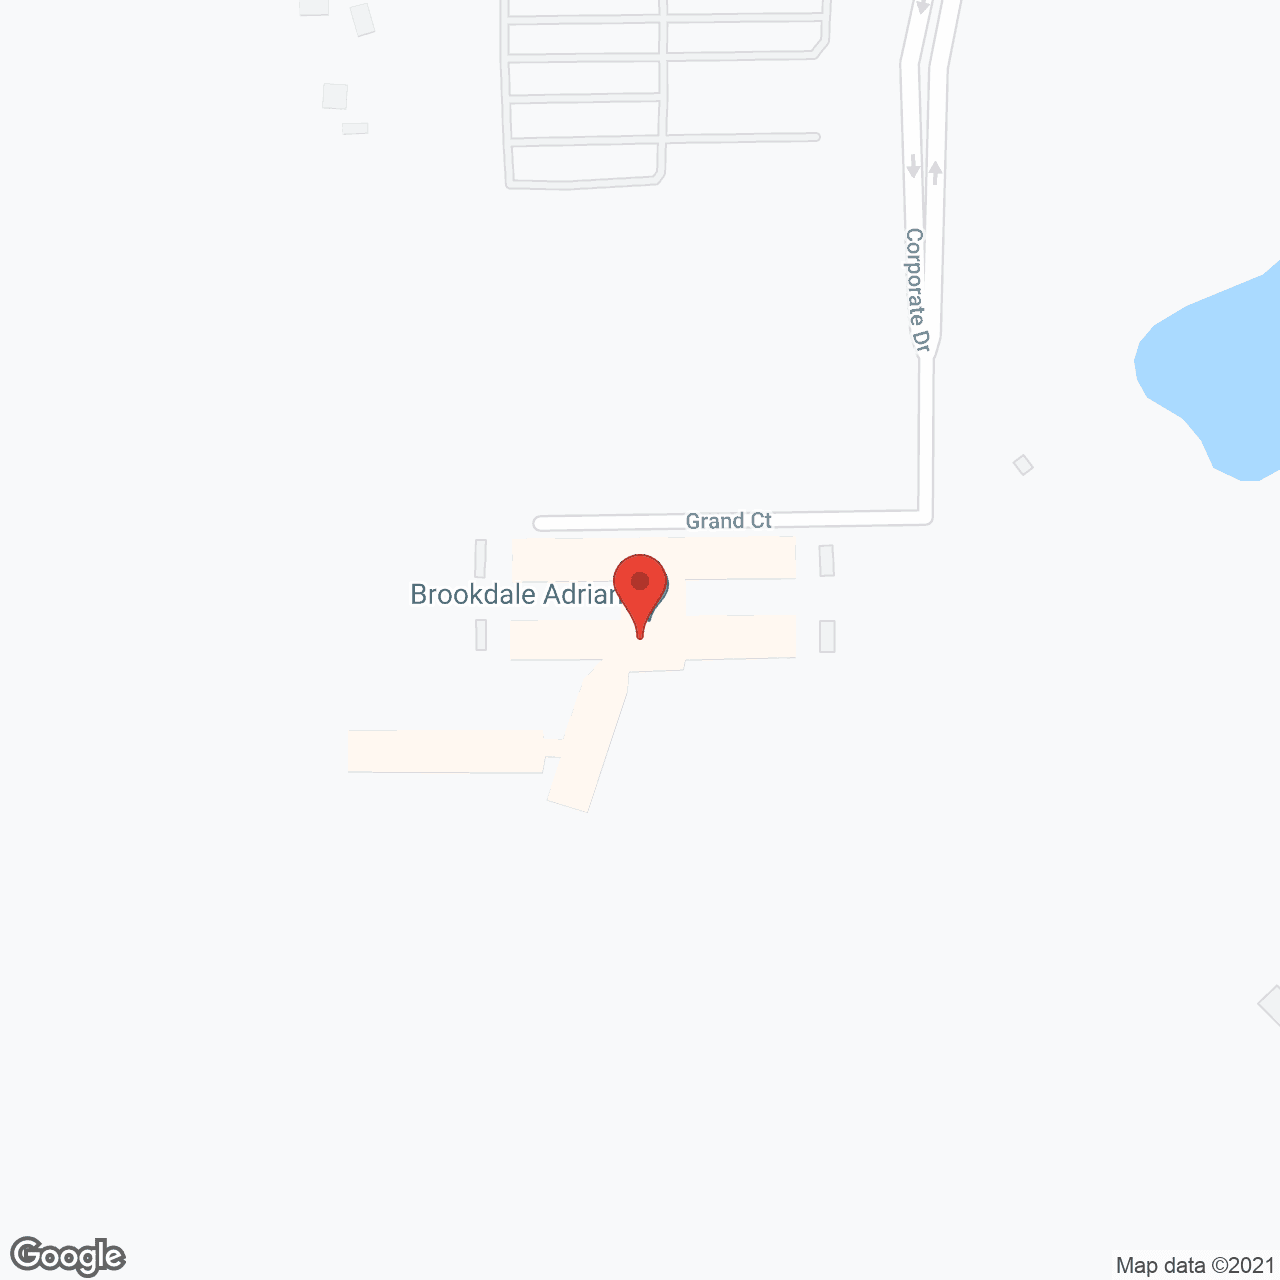 Brookdale Adrian in google map